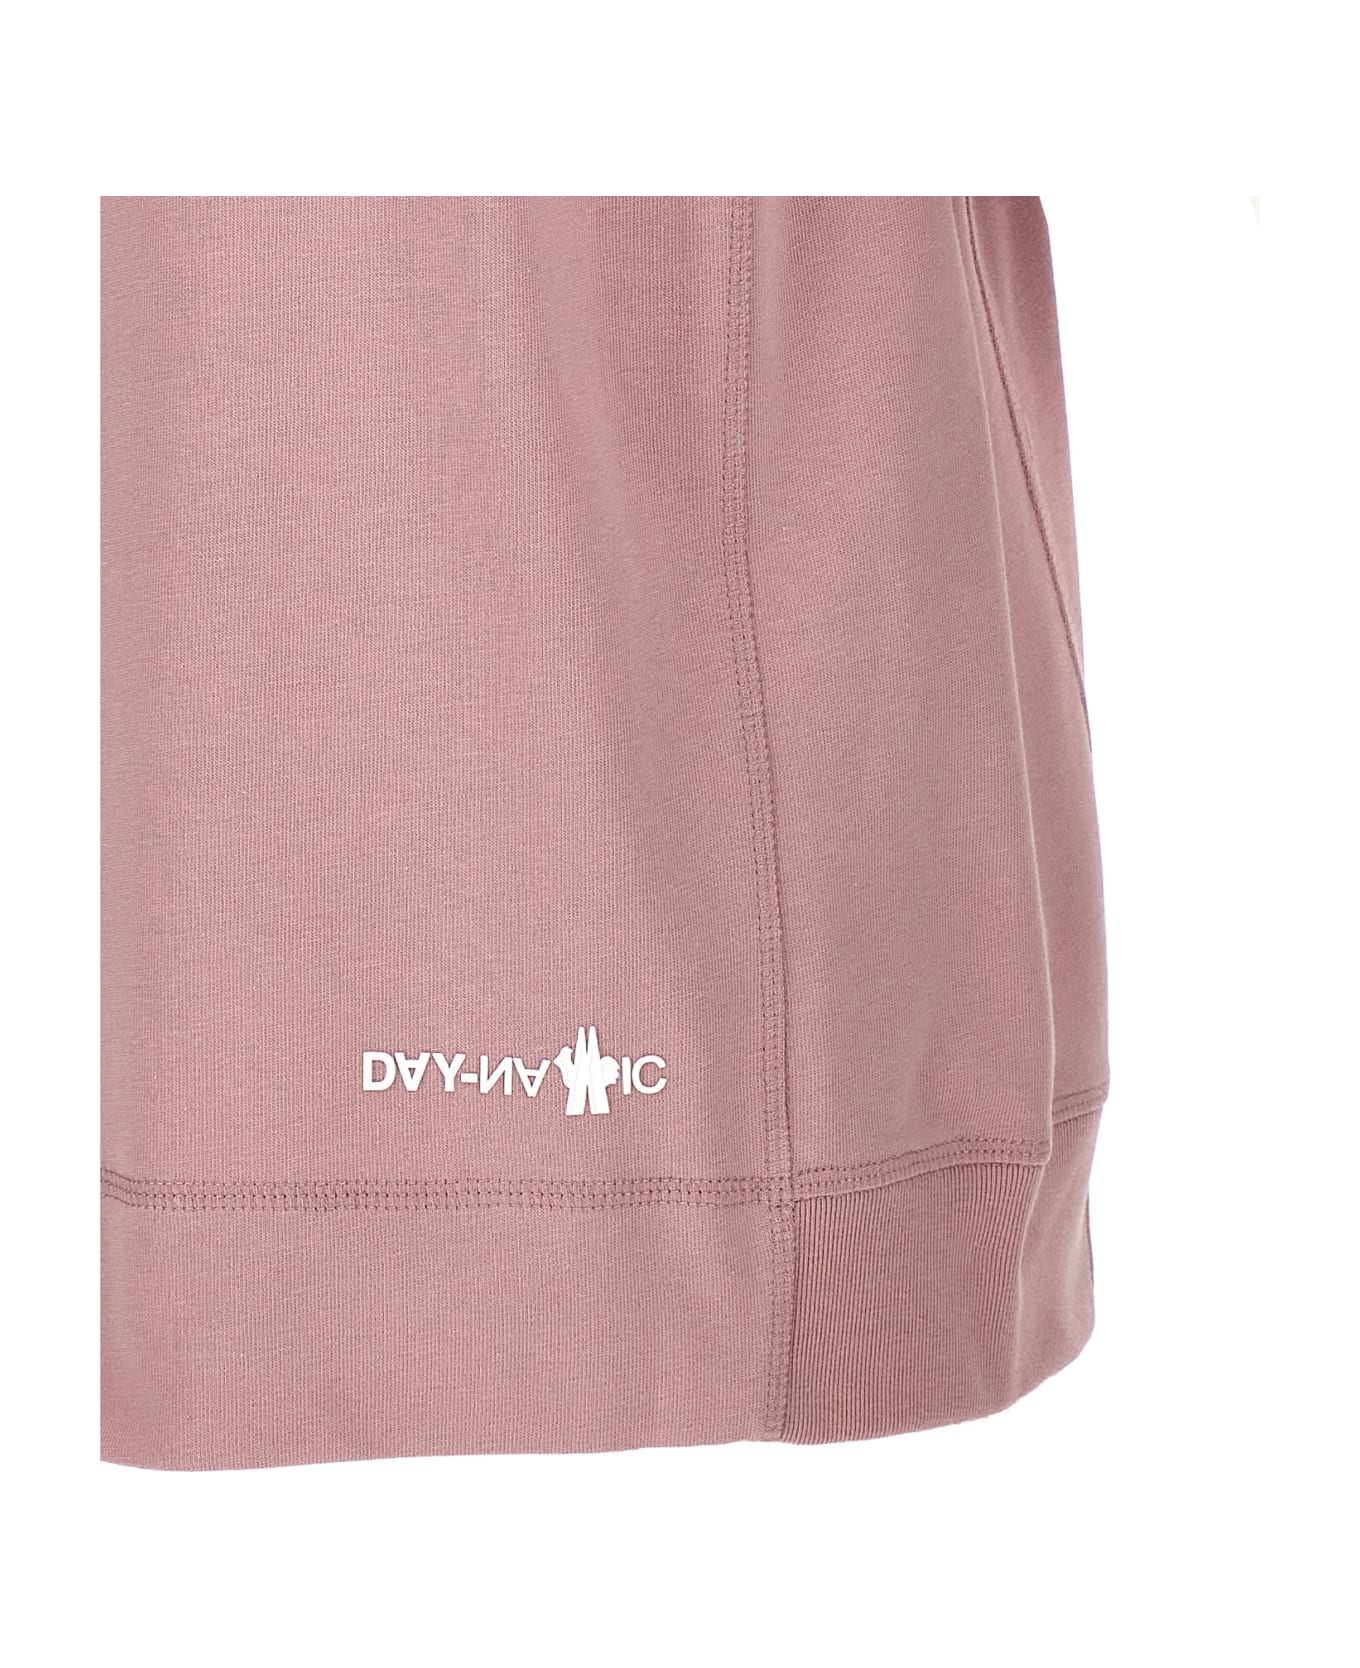 Moncler Grenoble Logo Print T-shirt - Pink